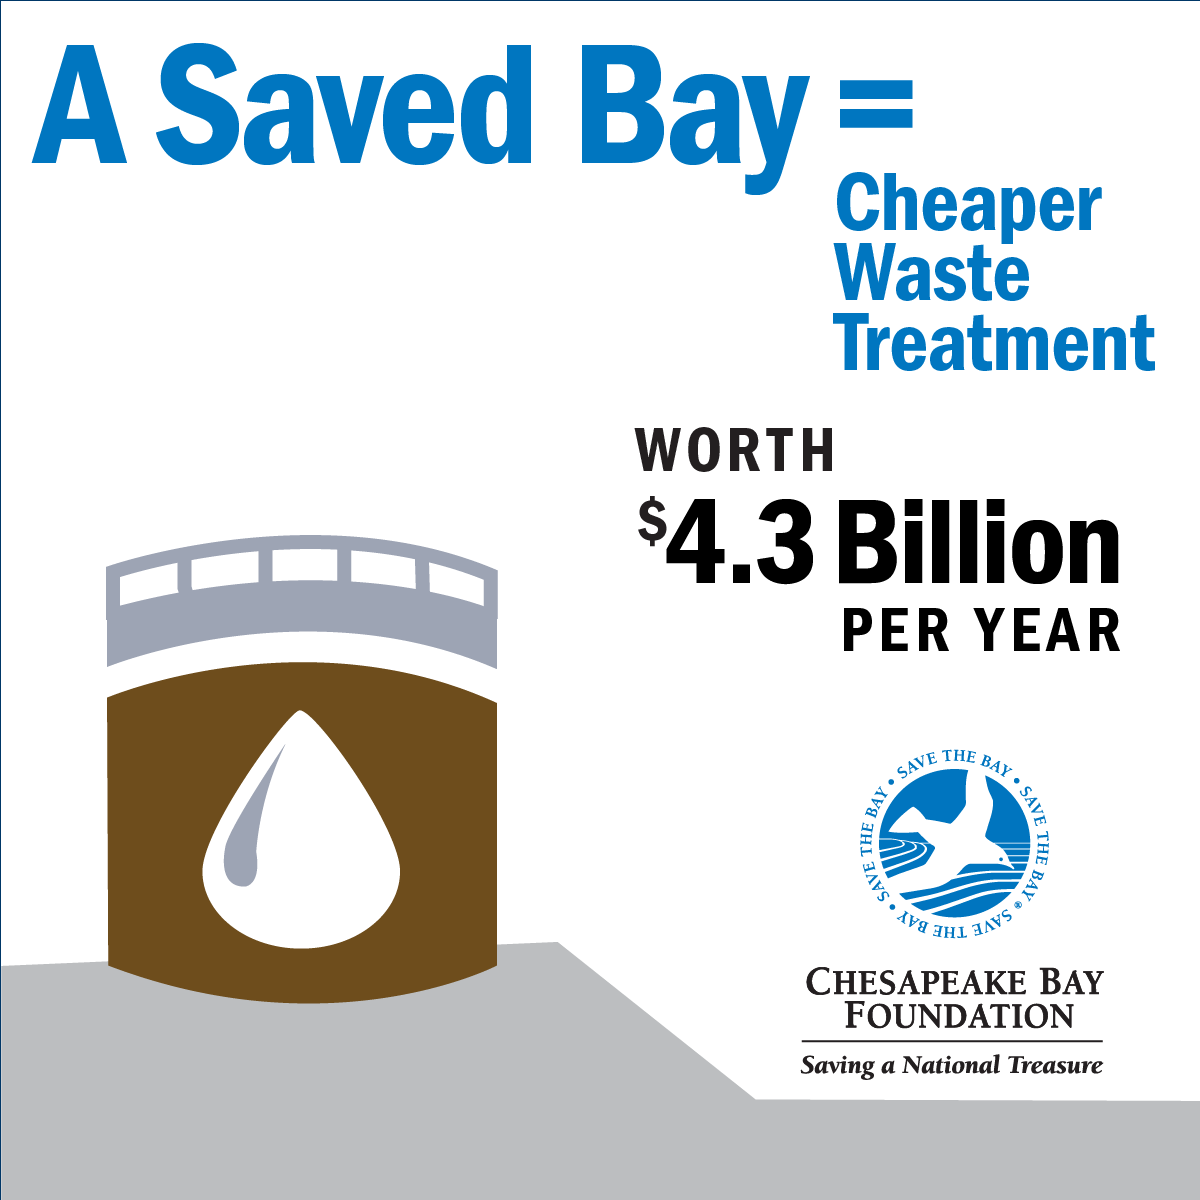 A Saved Bay = Cheaper Water Treatment worth $4.3 Billion per year